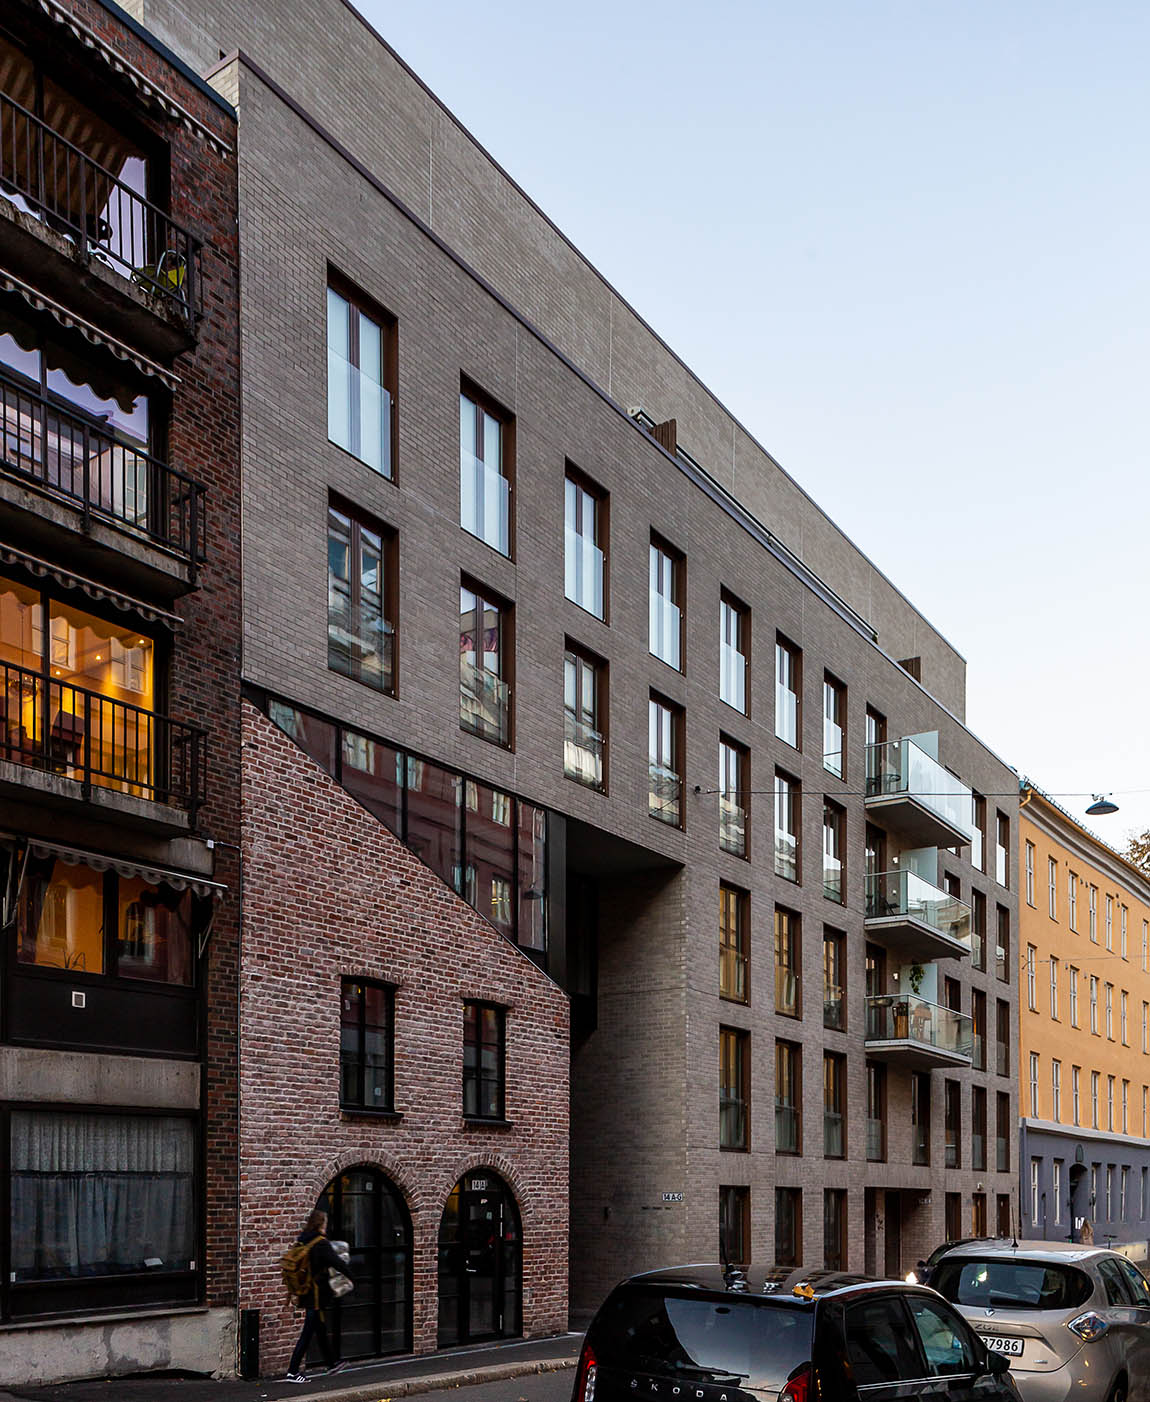 Aksetøy Arkitektur: Bringing value to communities through architecture